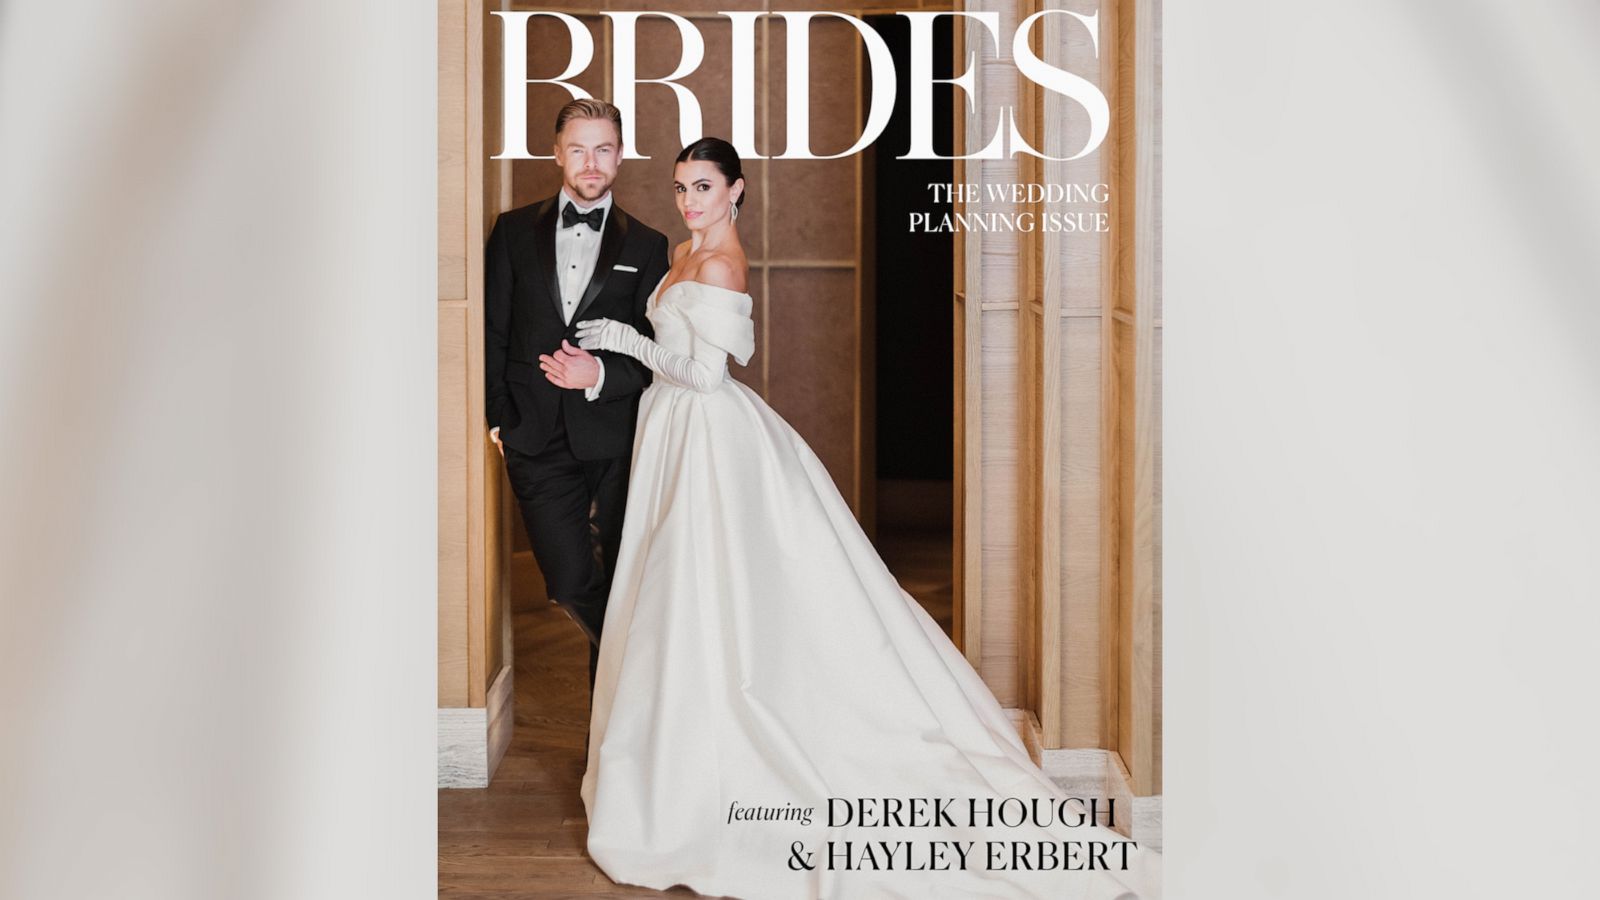 Derek Hough, Hayley Erbert talk wedding planning: 'I just want everyone to  feel our love' - Good Morning America